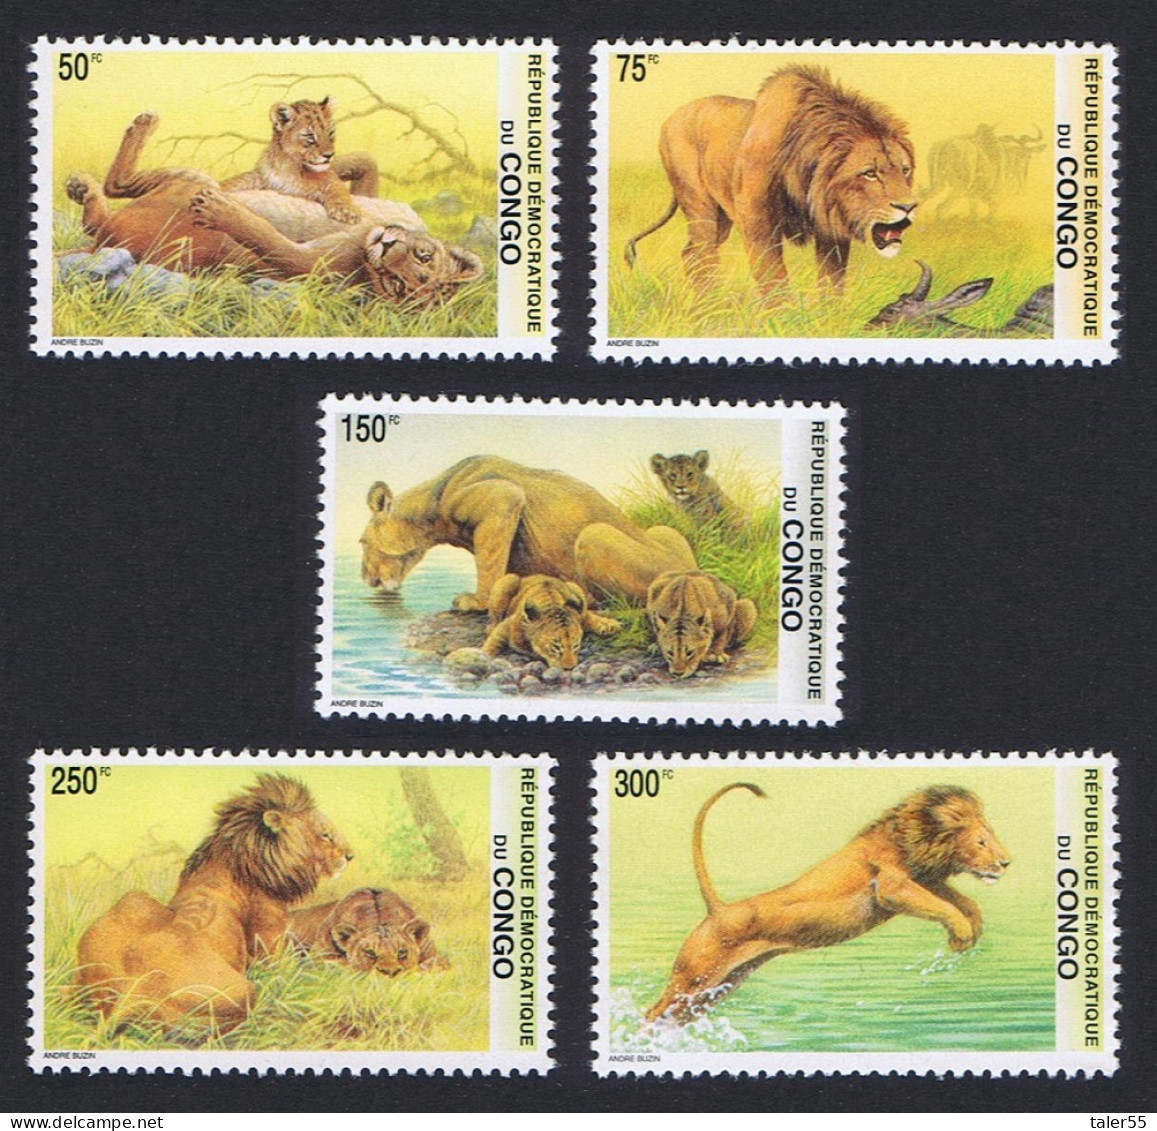 DR Congo Lions 5v 2002 MNH Sc#1621-1625 - Mint/hinged